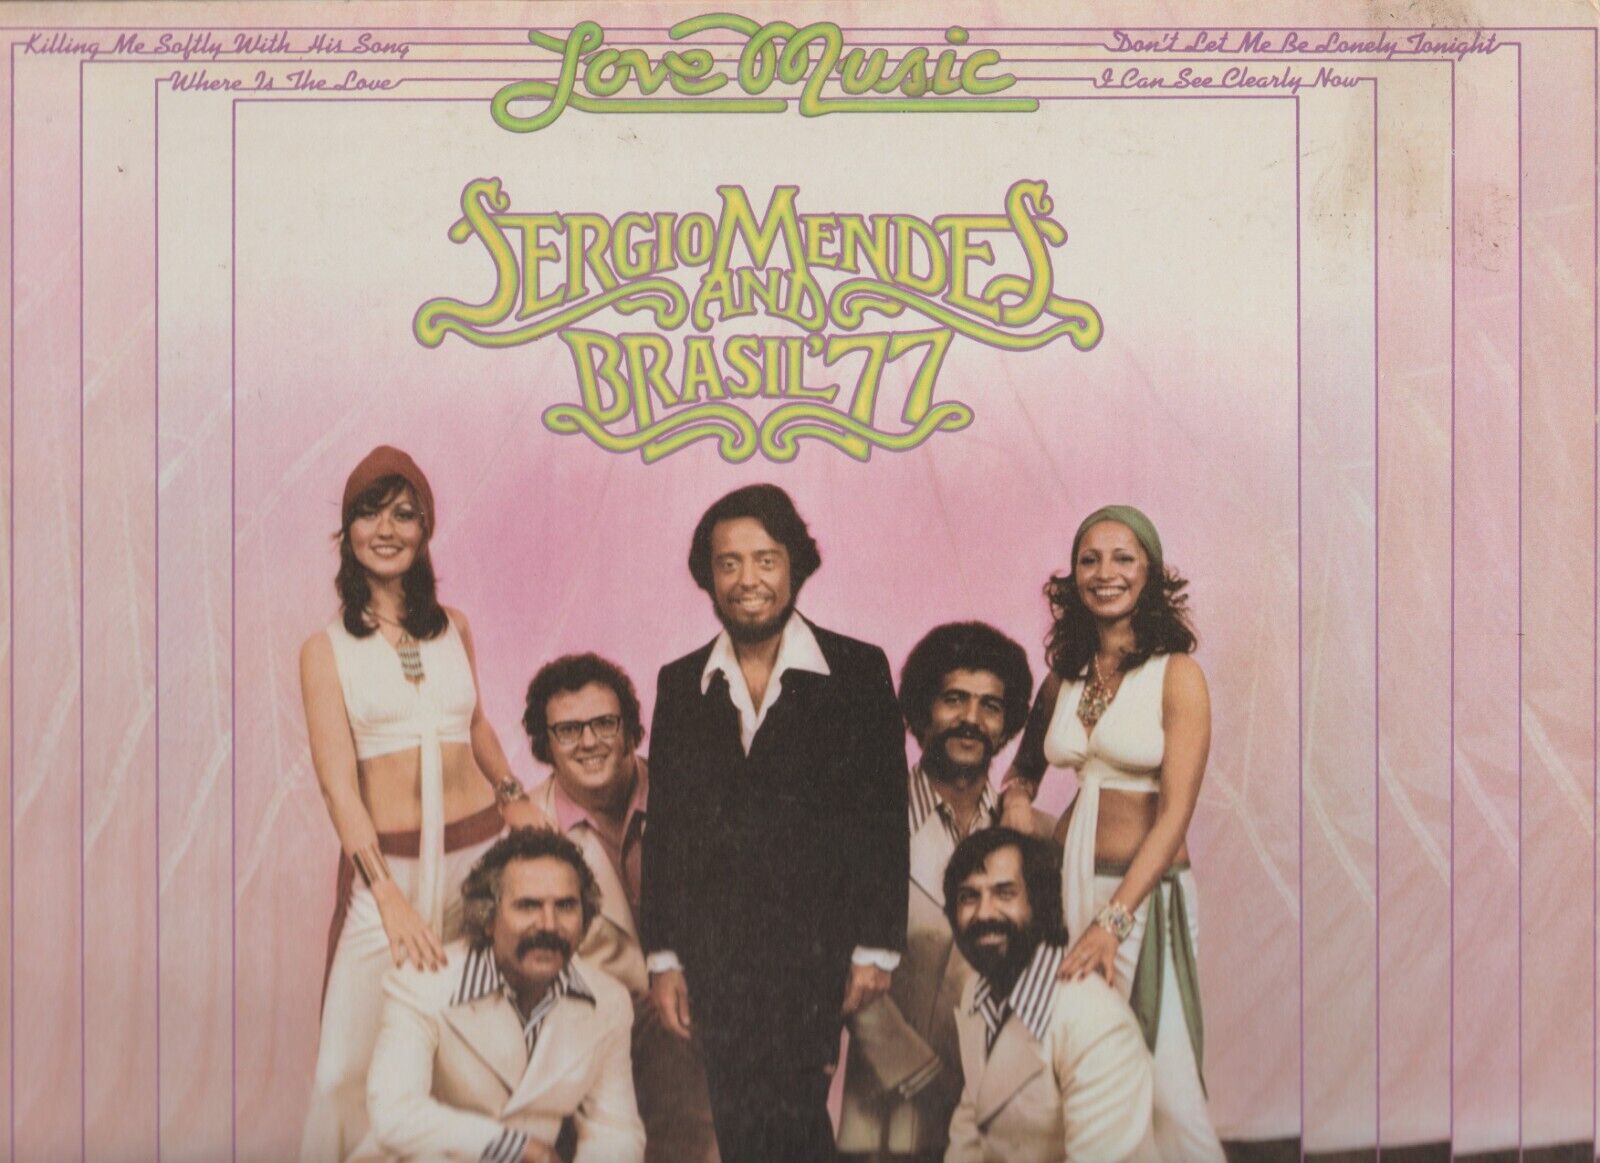 SERGIO MENDEZ & BRAZIL '77~LOVE MUSIC, 1973 original Bell LP! M-